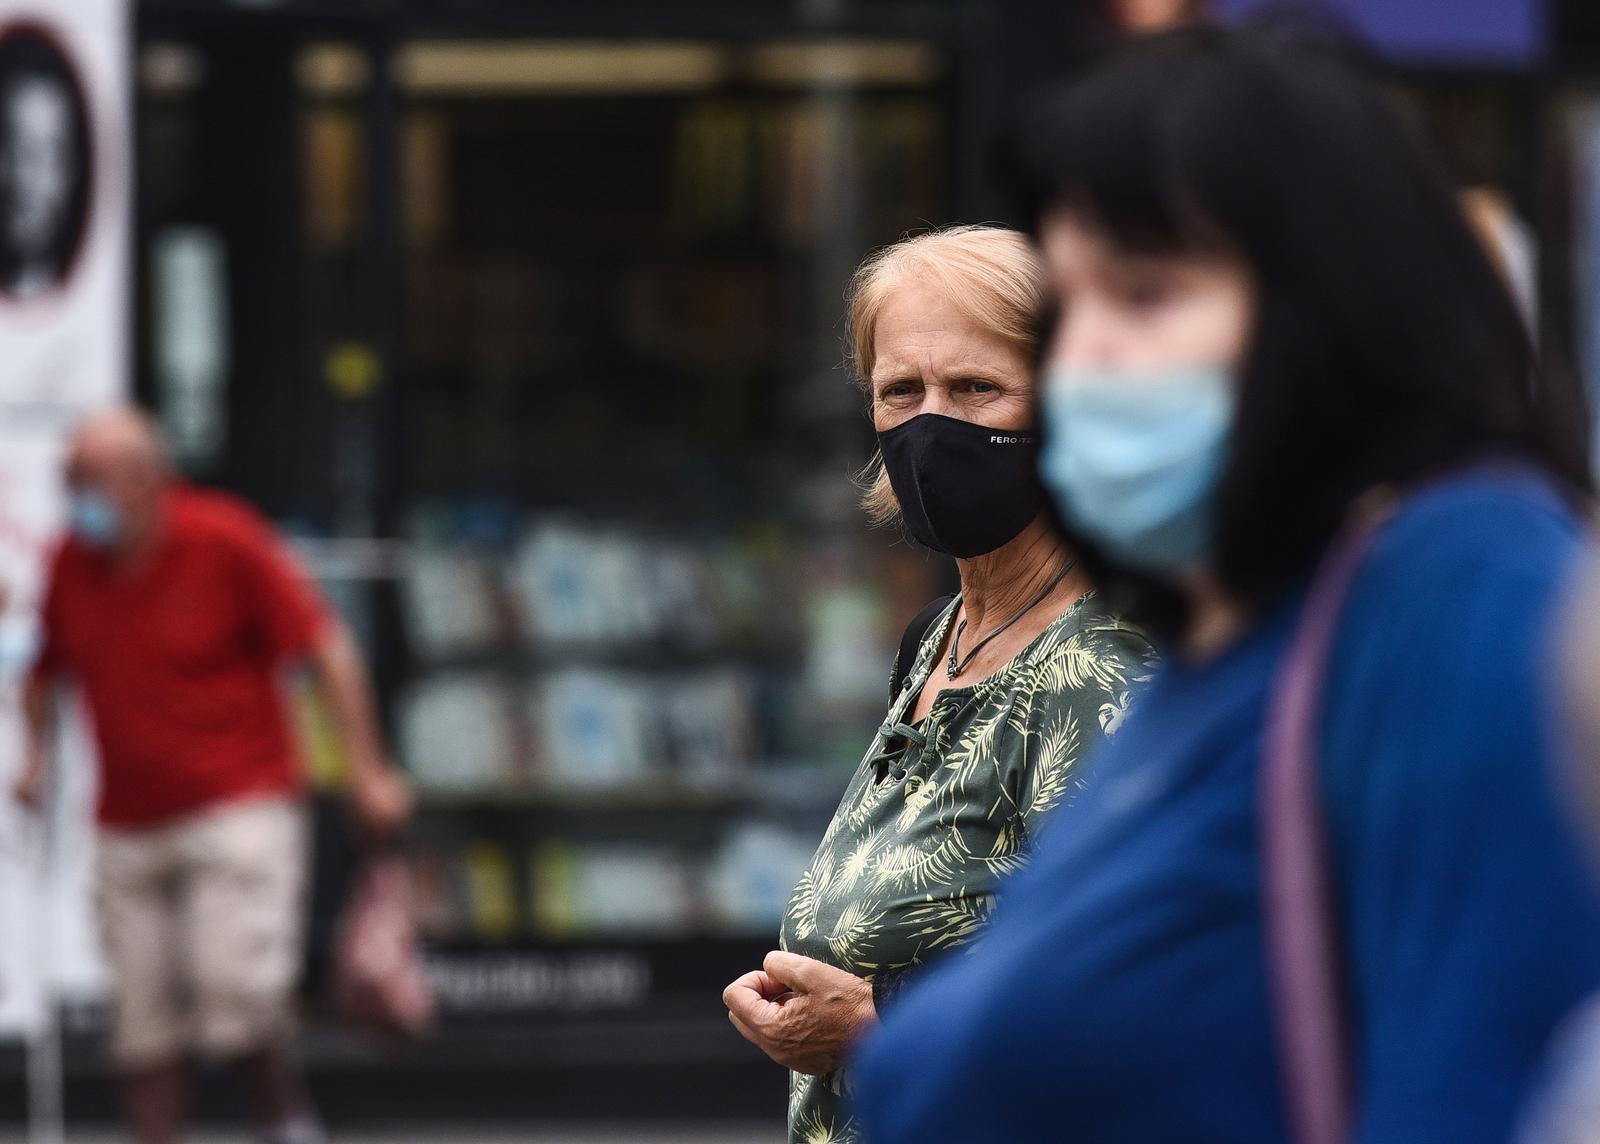 25.8.2021., Zagreb - Povecani broj zarazenih koronavirusom, gradjani s maskama na licu
Photo: Neva Zganec/PIXSELL